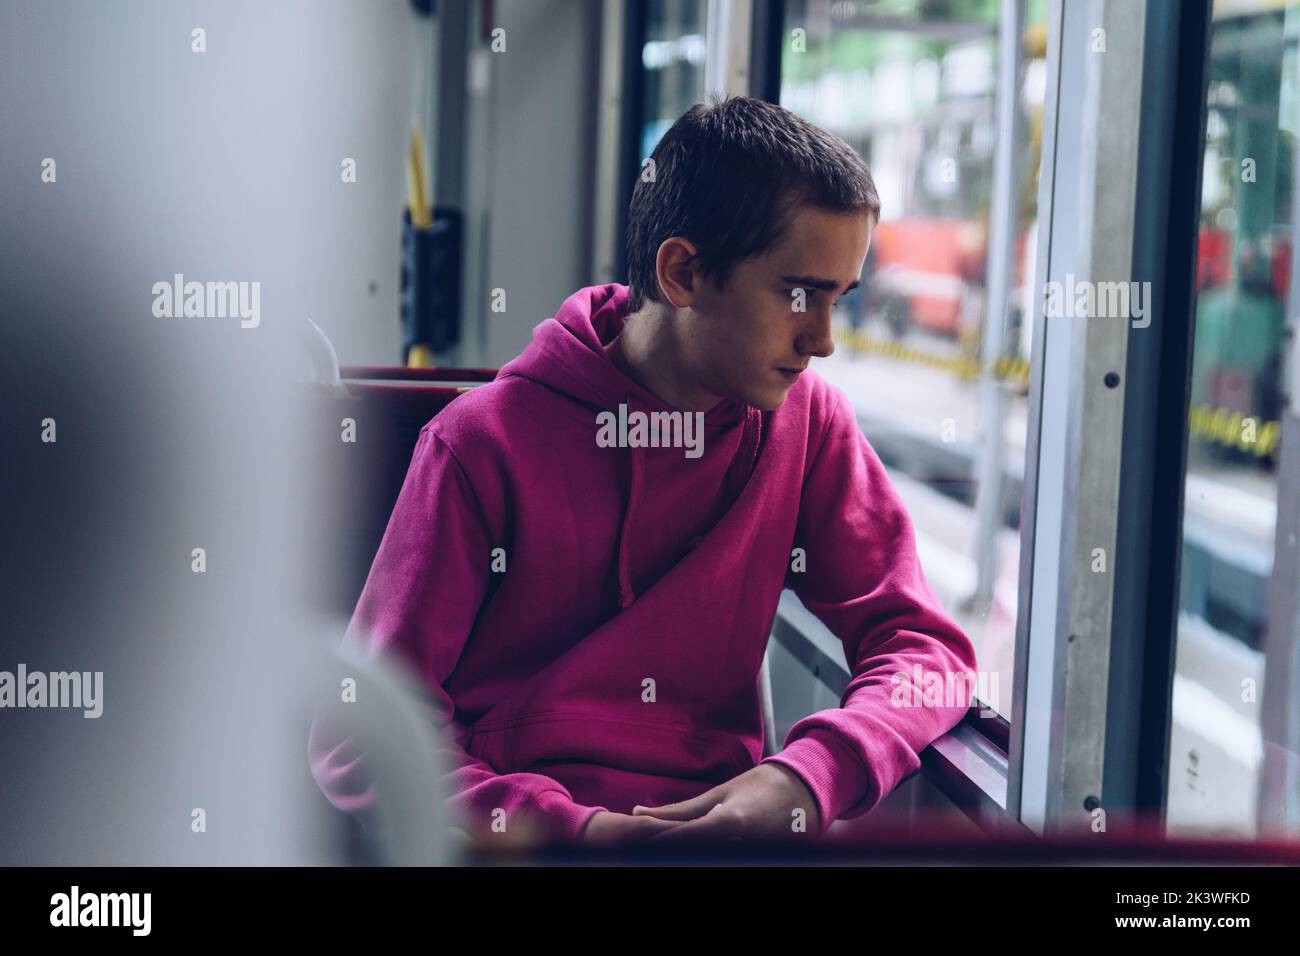 Teenage boy in a pink hooded sweatshirt, pensive s traveling by bus Stock Photo